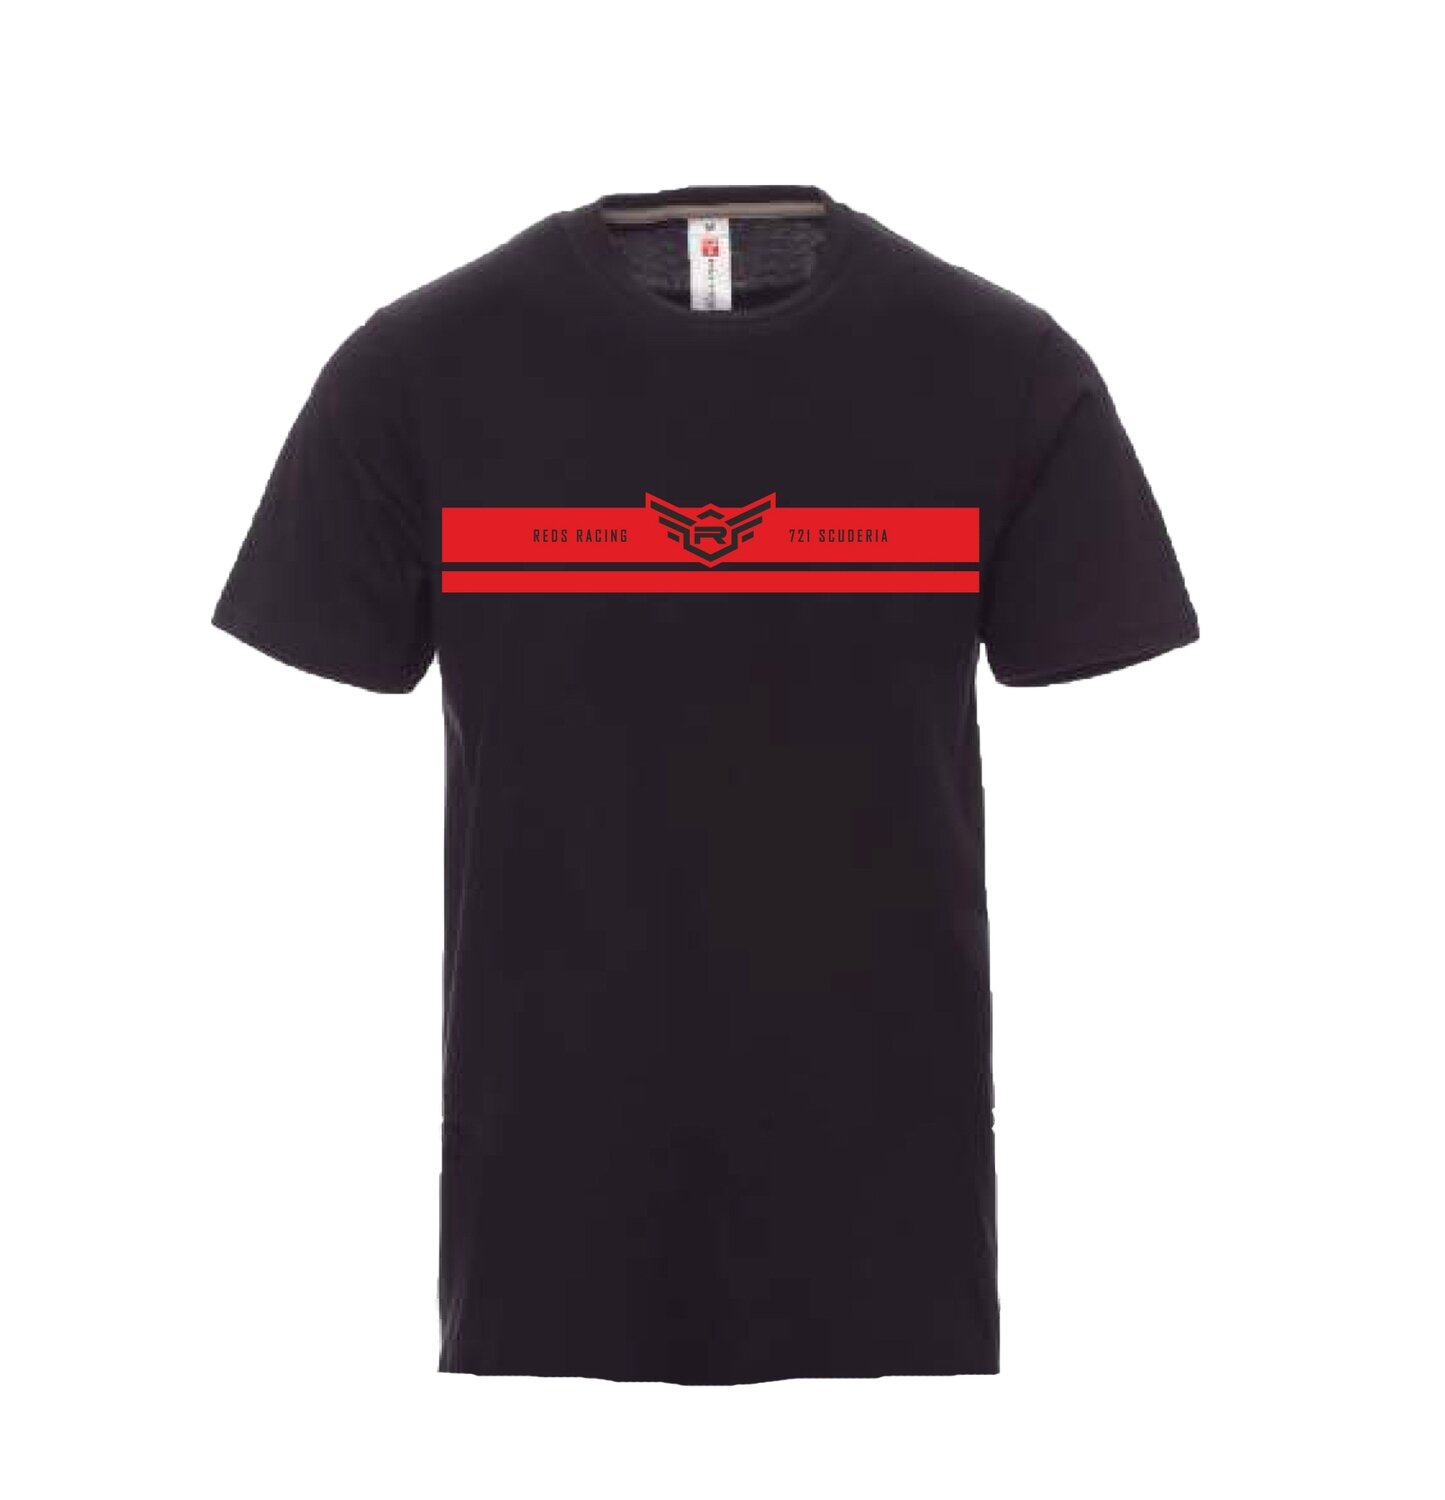 Camiseta Reds Racing Black/red Talla XL